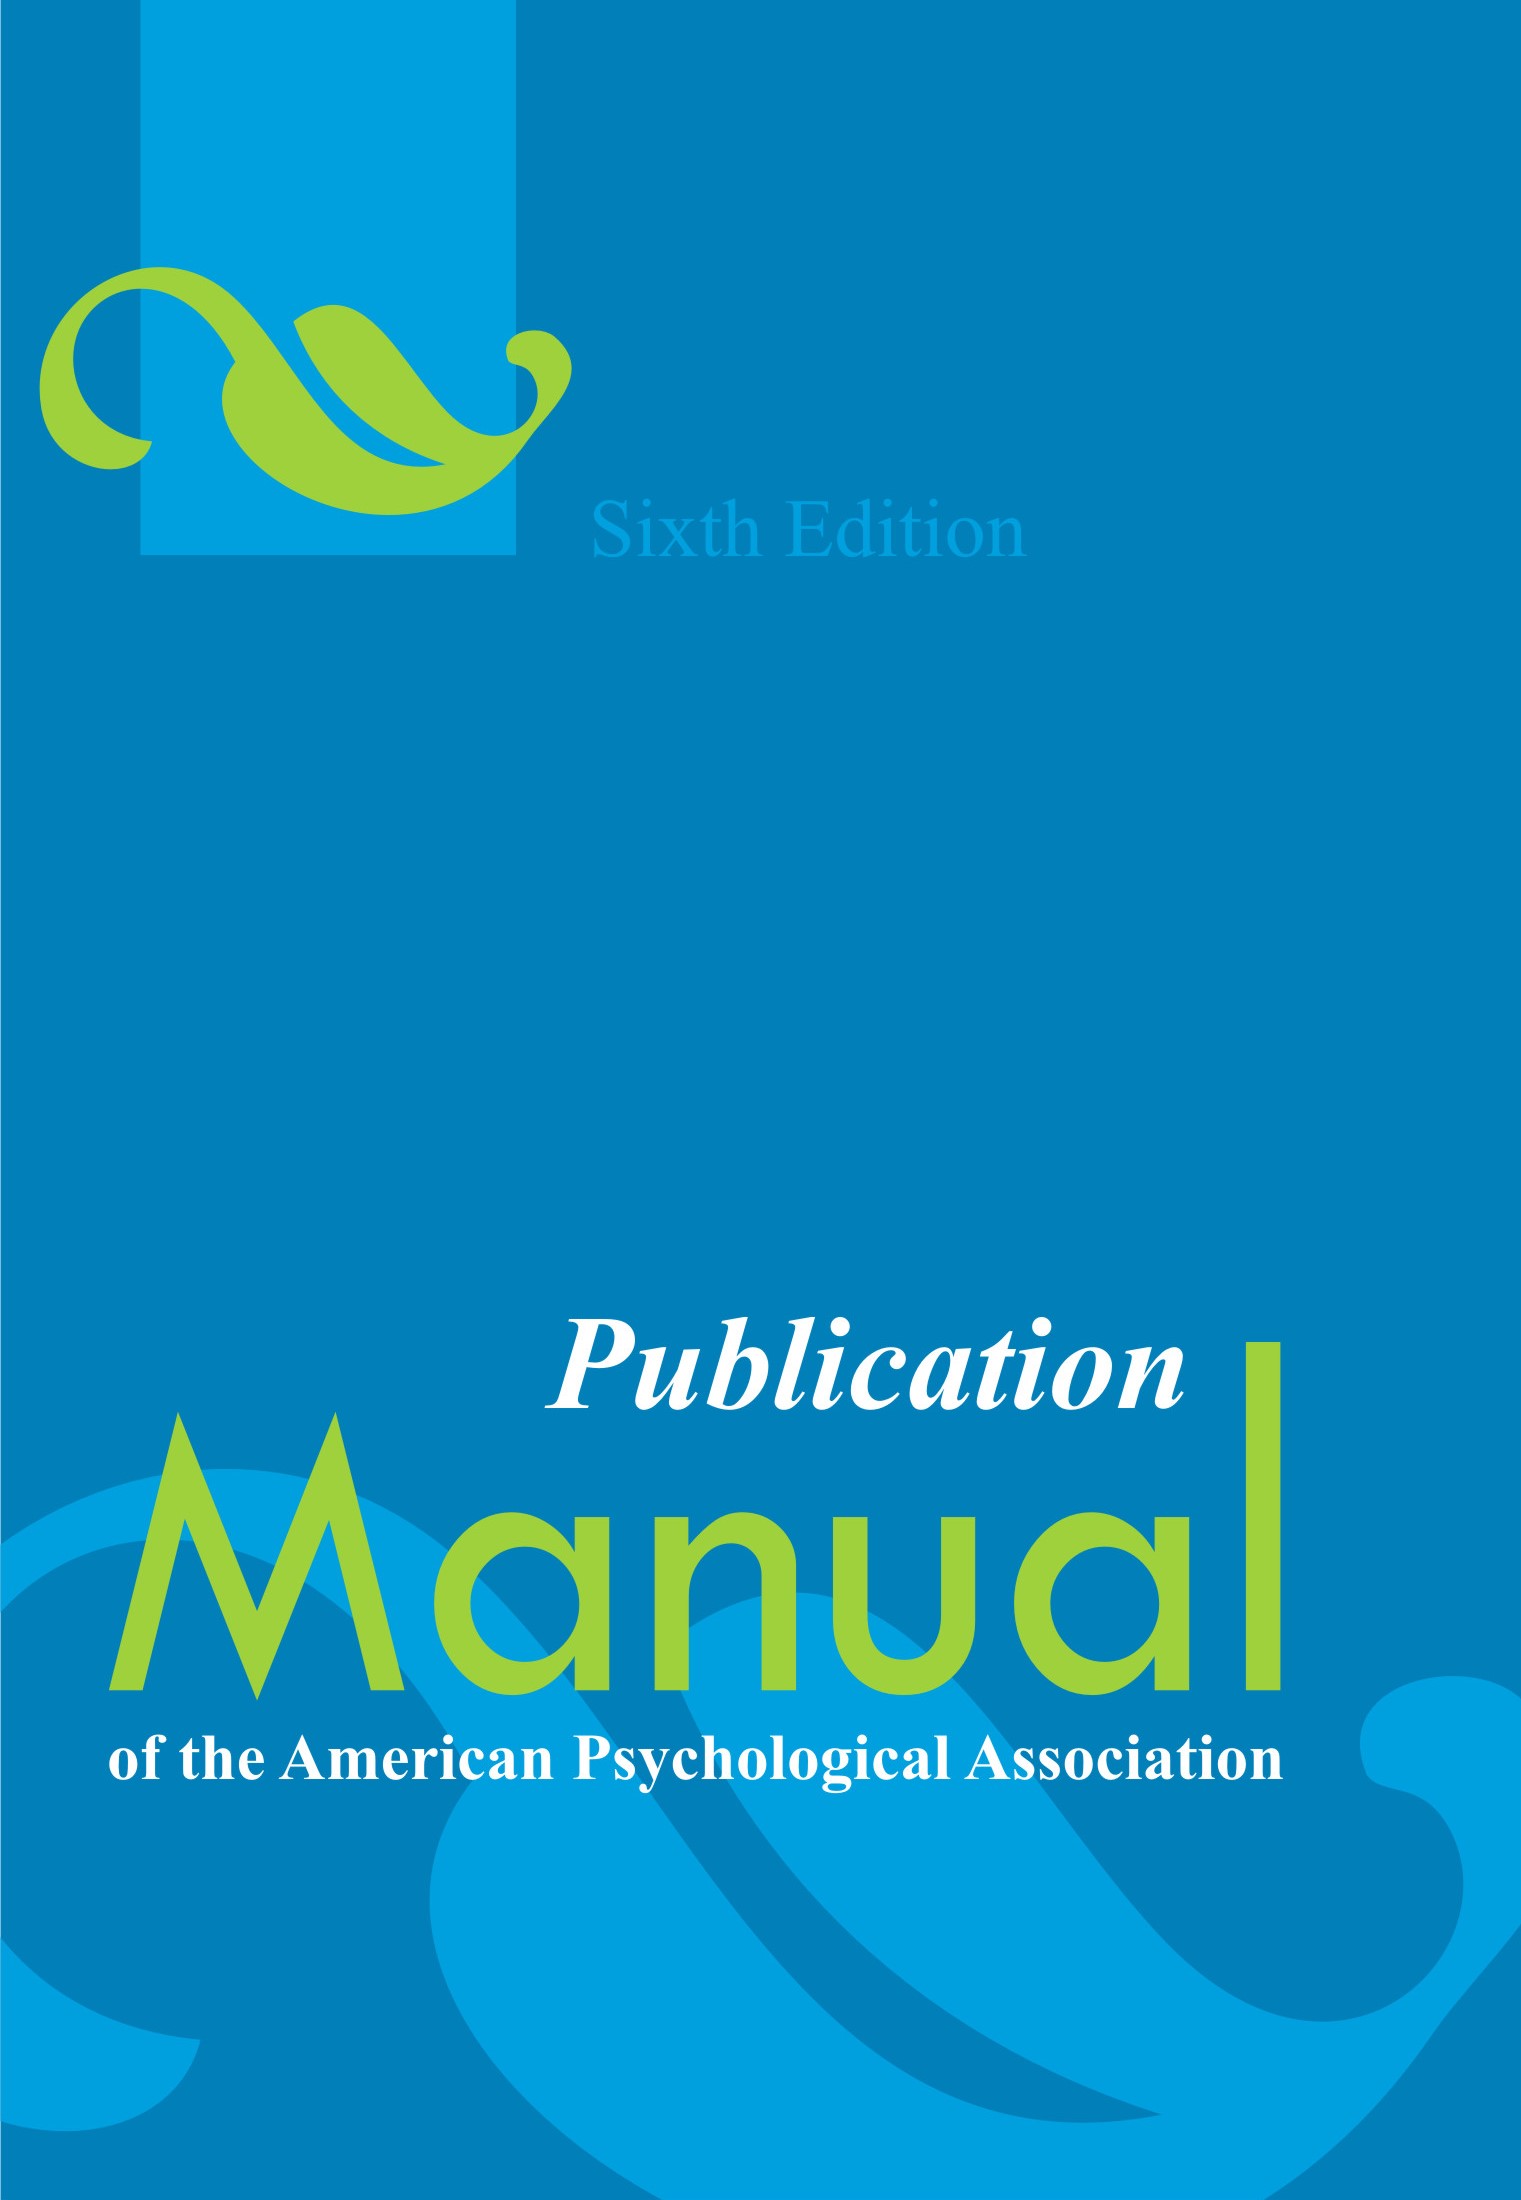 APA Publication Manual cover